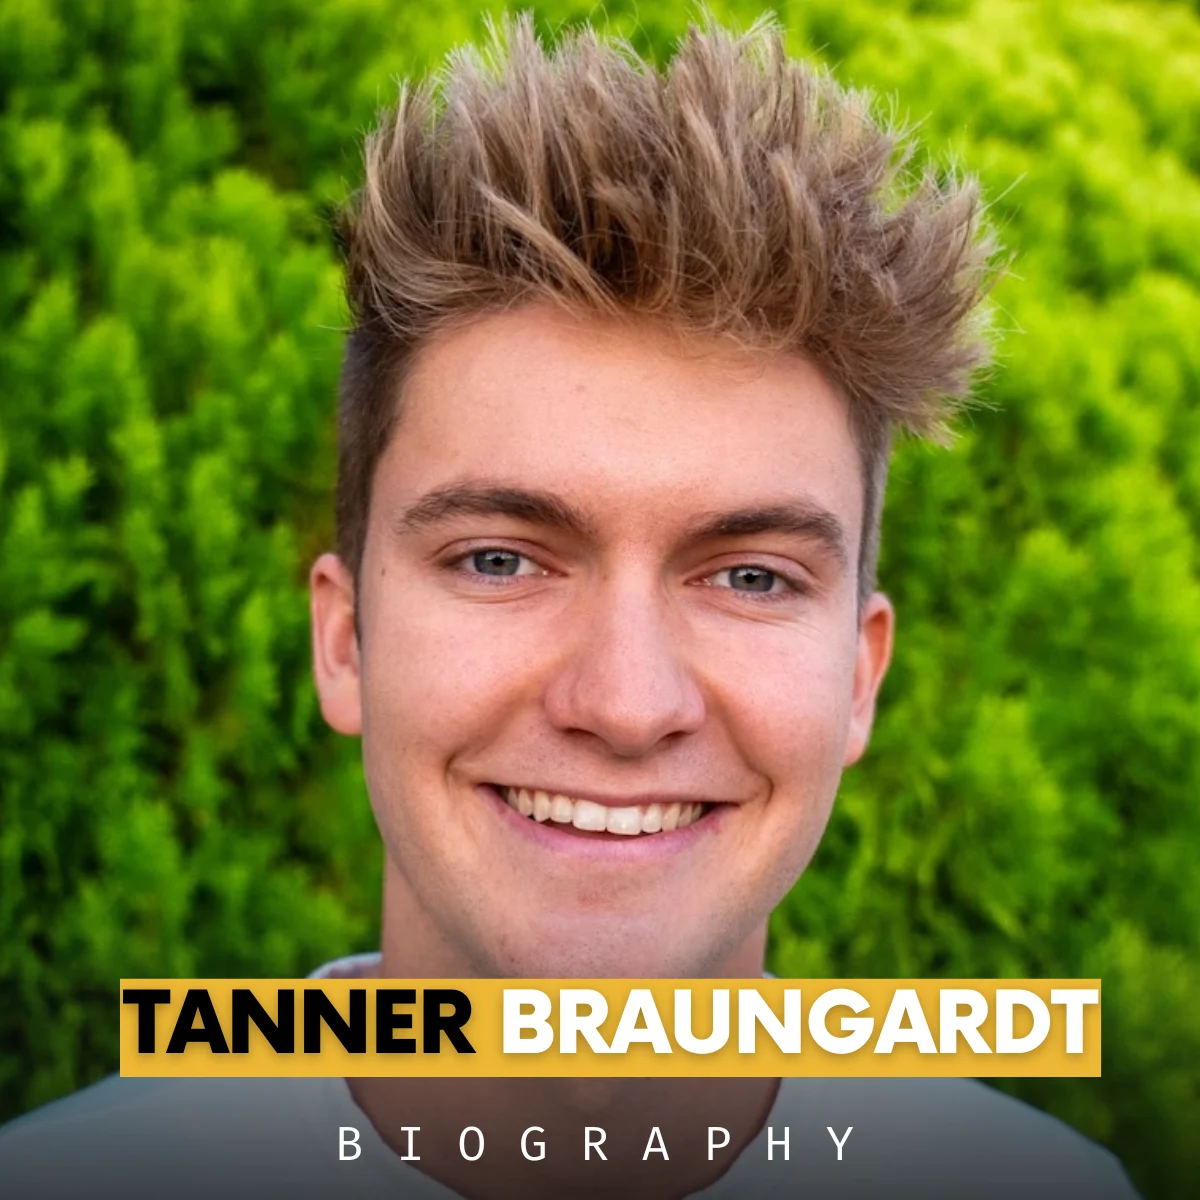 Tanner Braungardt biography